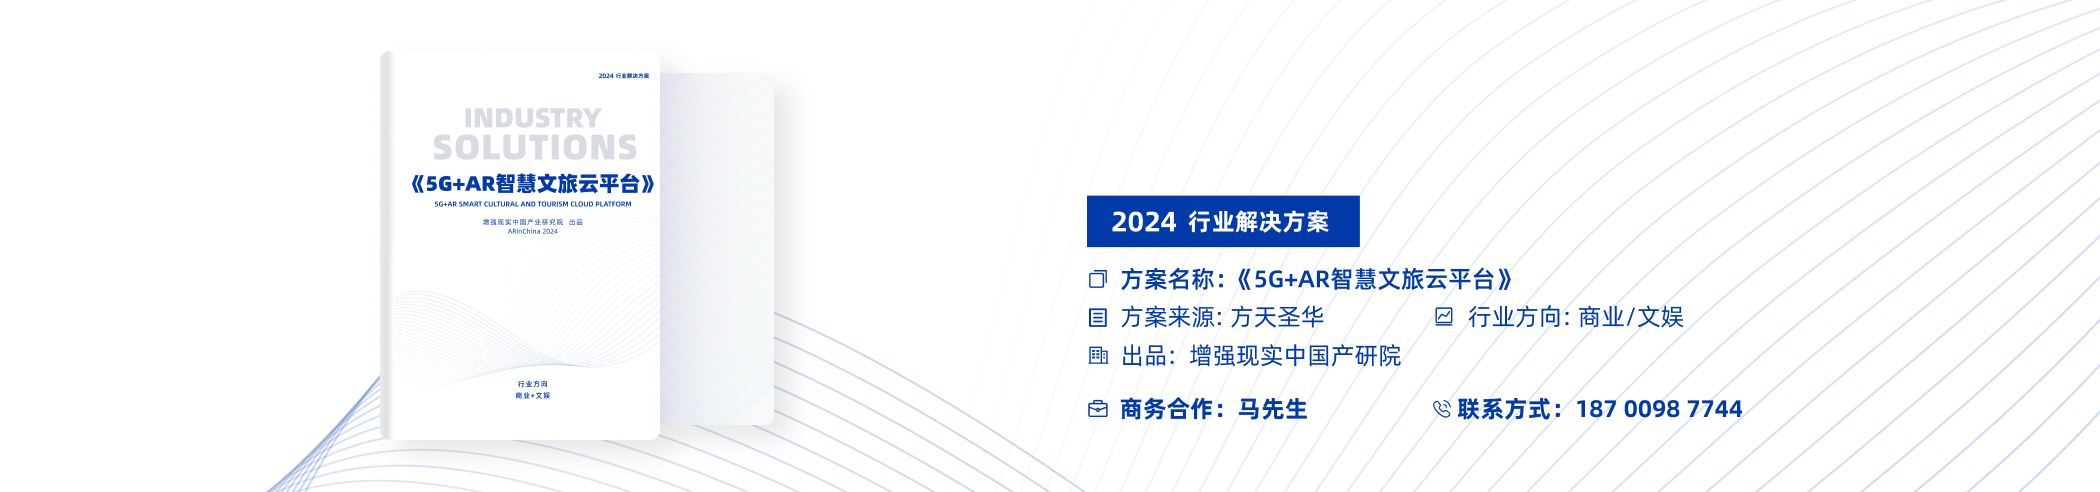 ARinChina2023元宇宙年度荣誉榜——行业影响力榜单